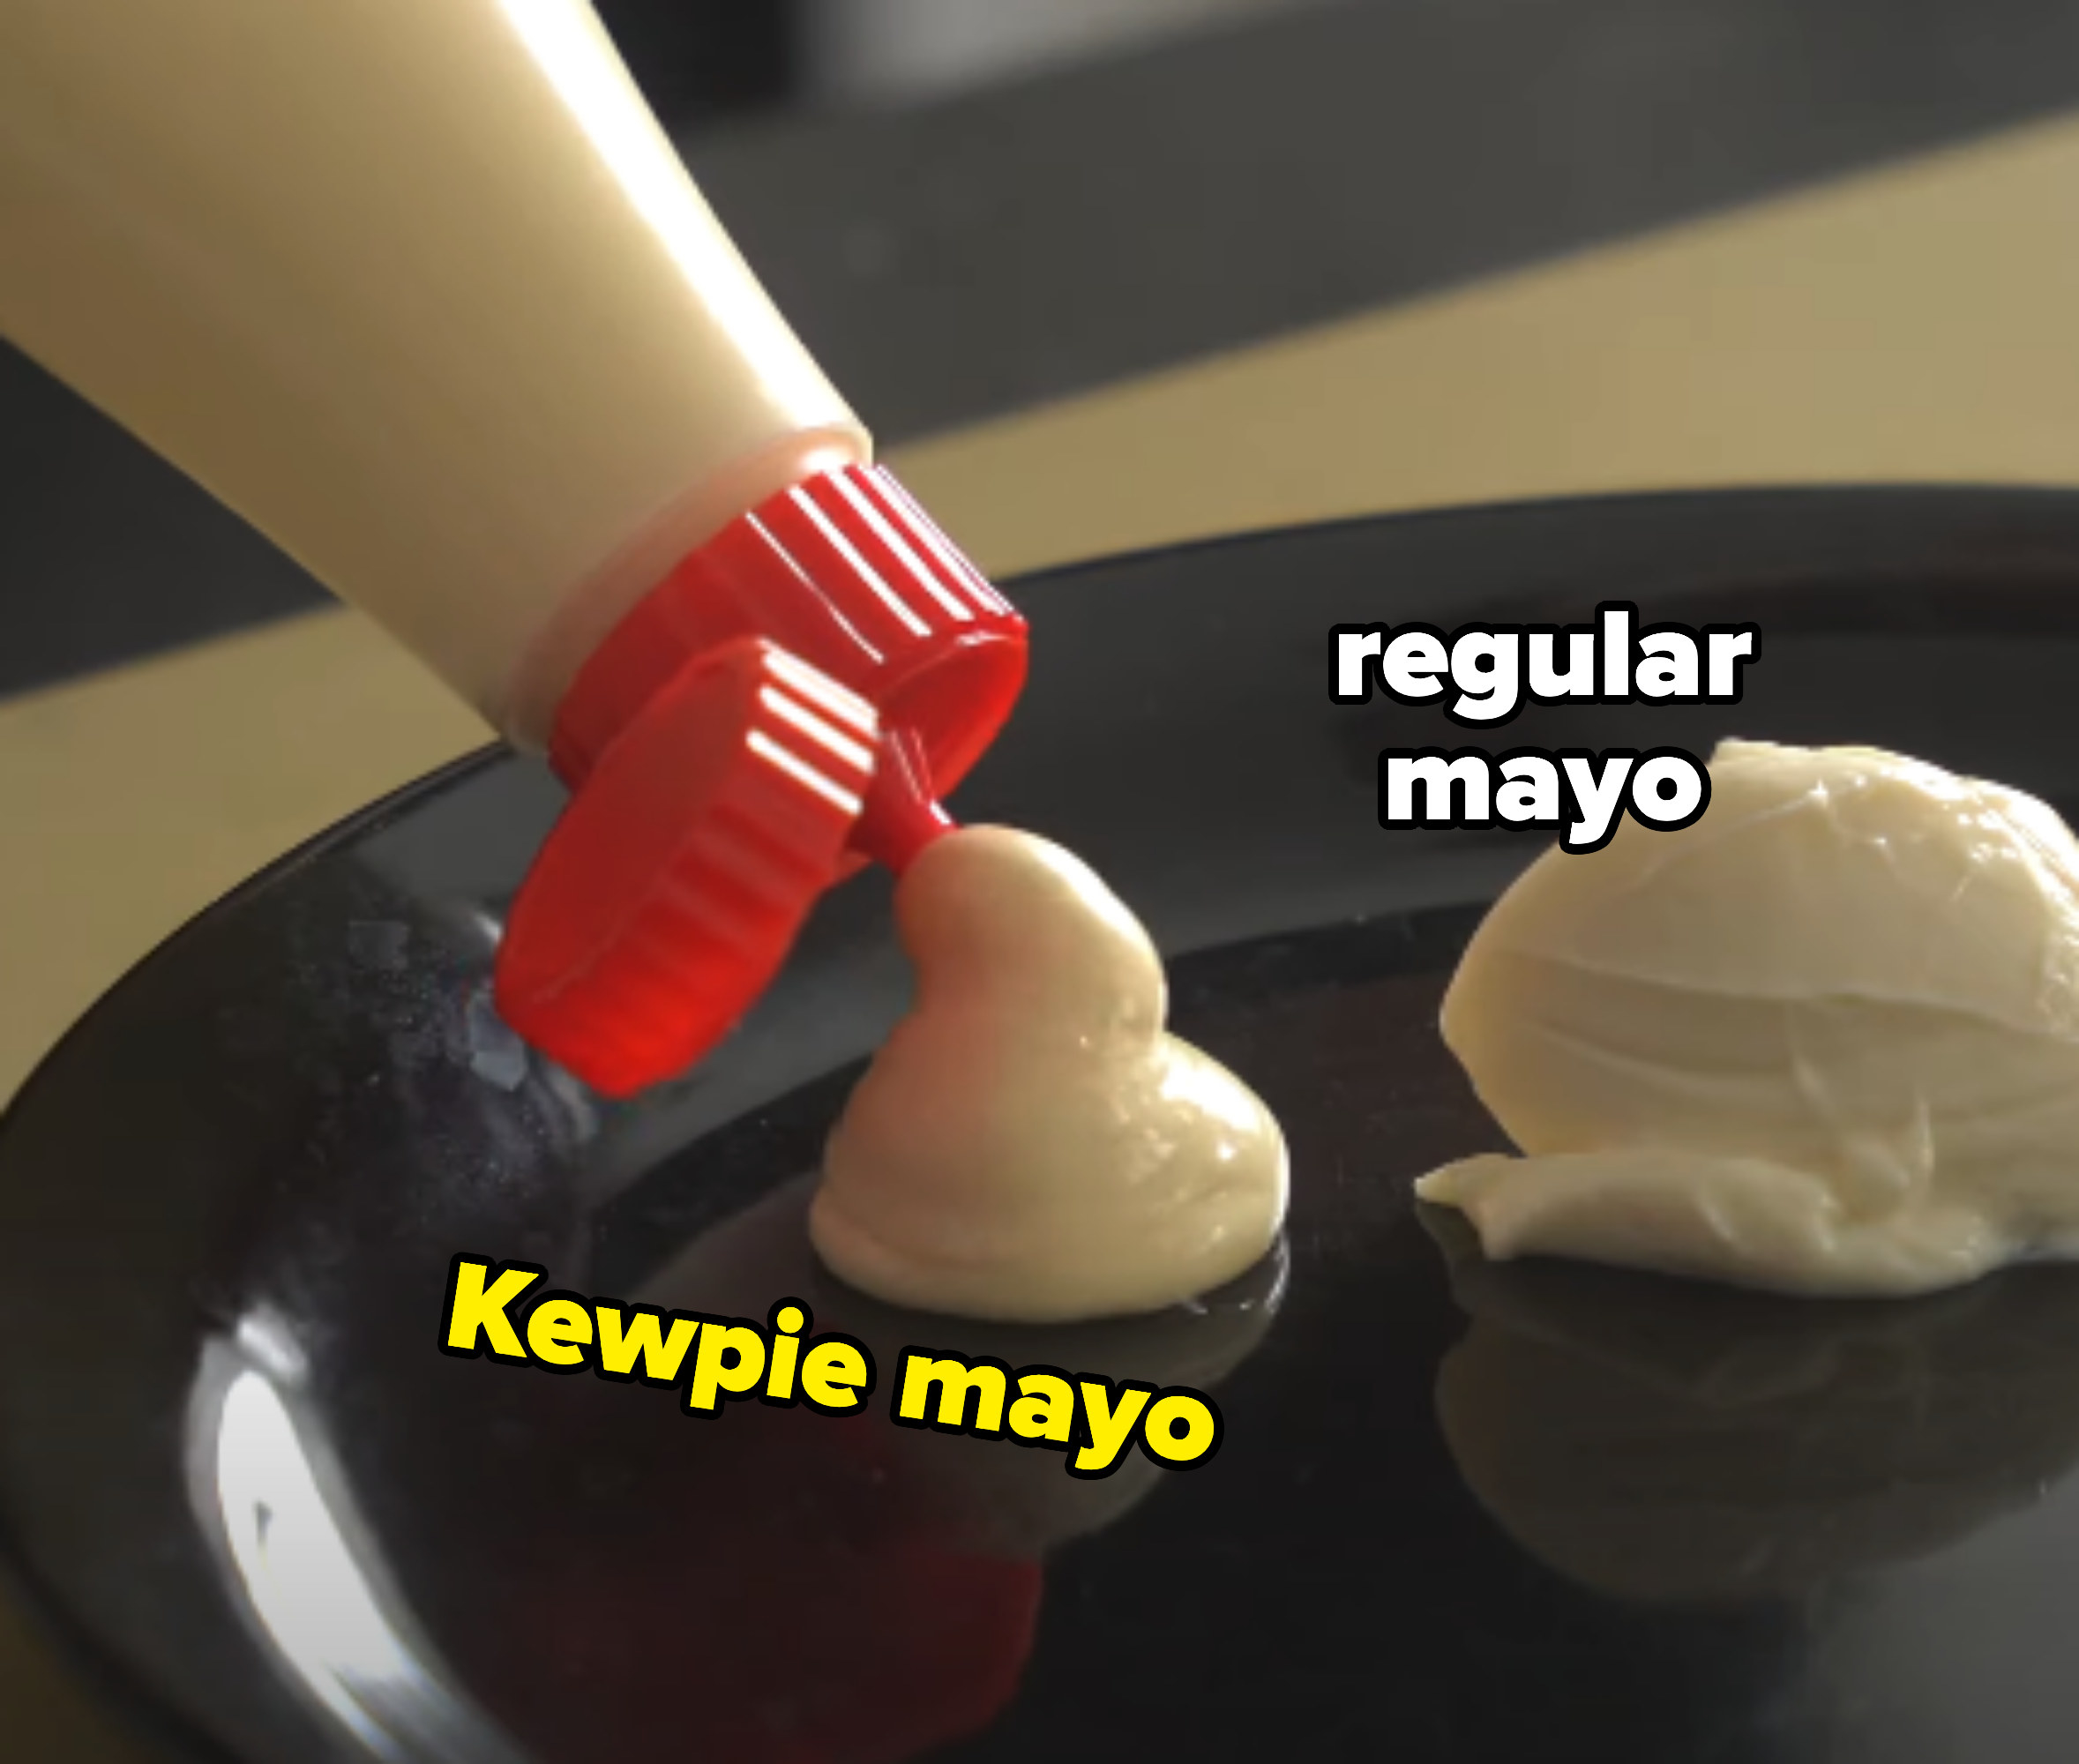 kewpie mayo vs regular mayo on a plate